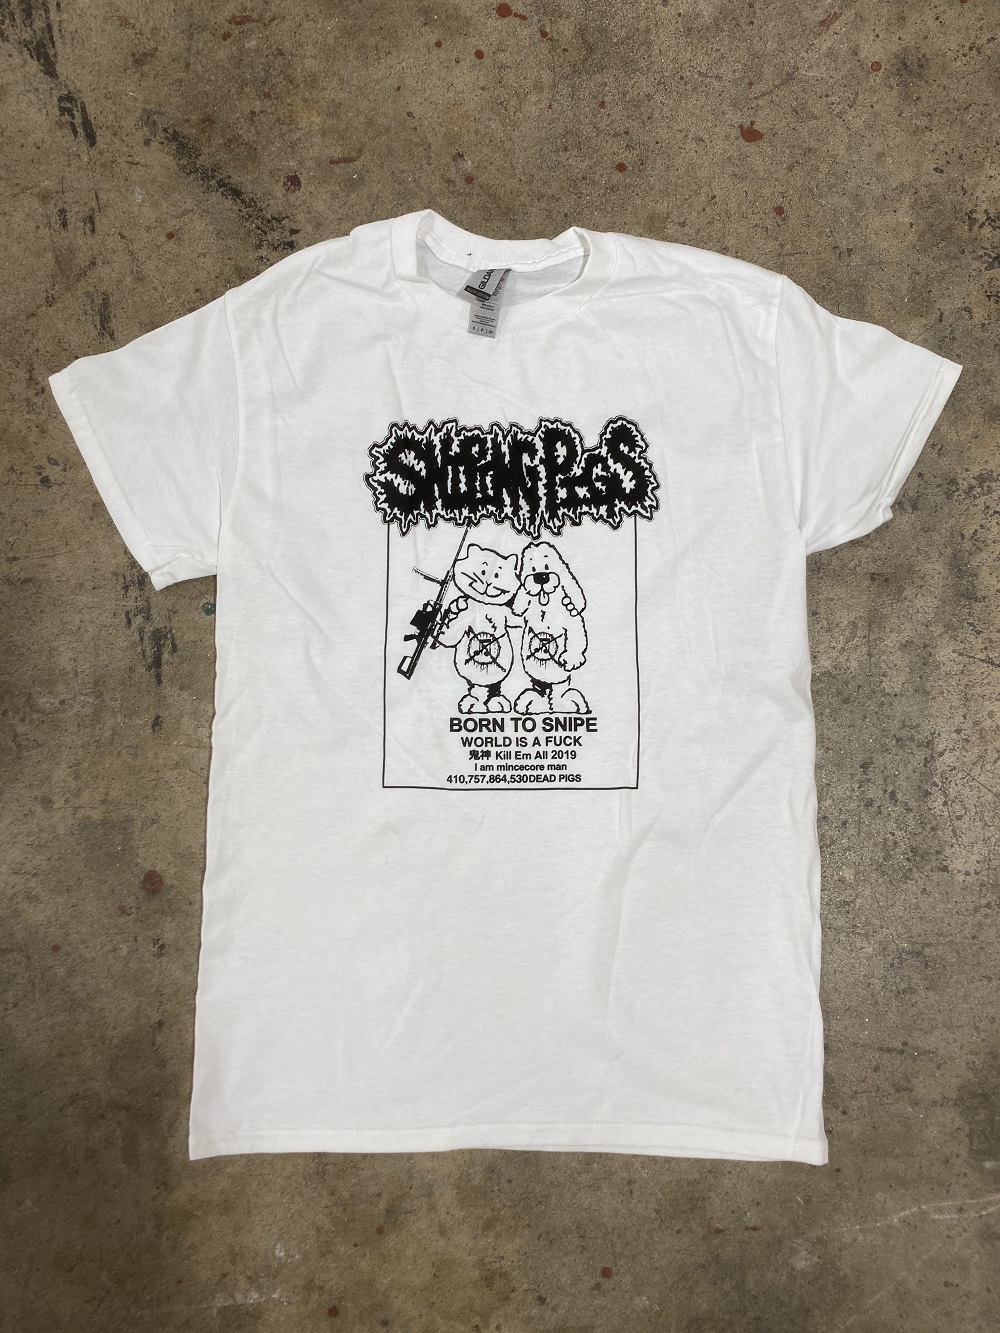 Sniping Pigs - Born To Snipe Shirt (XXXL)